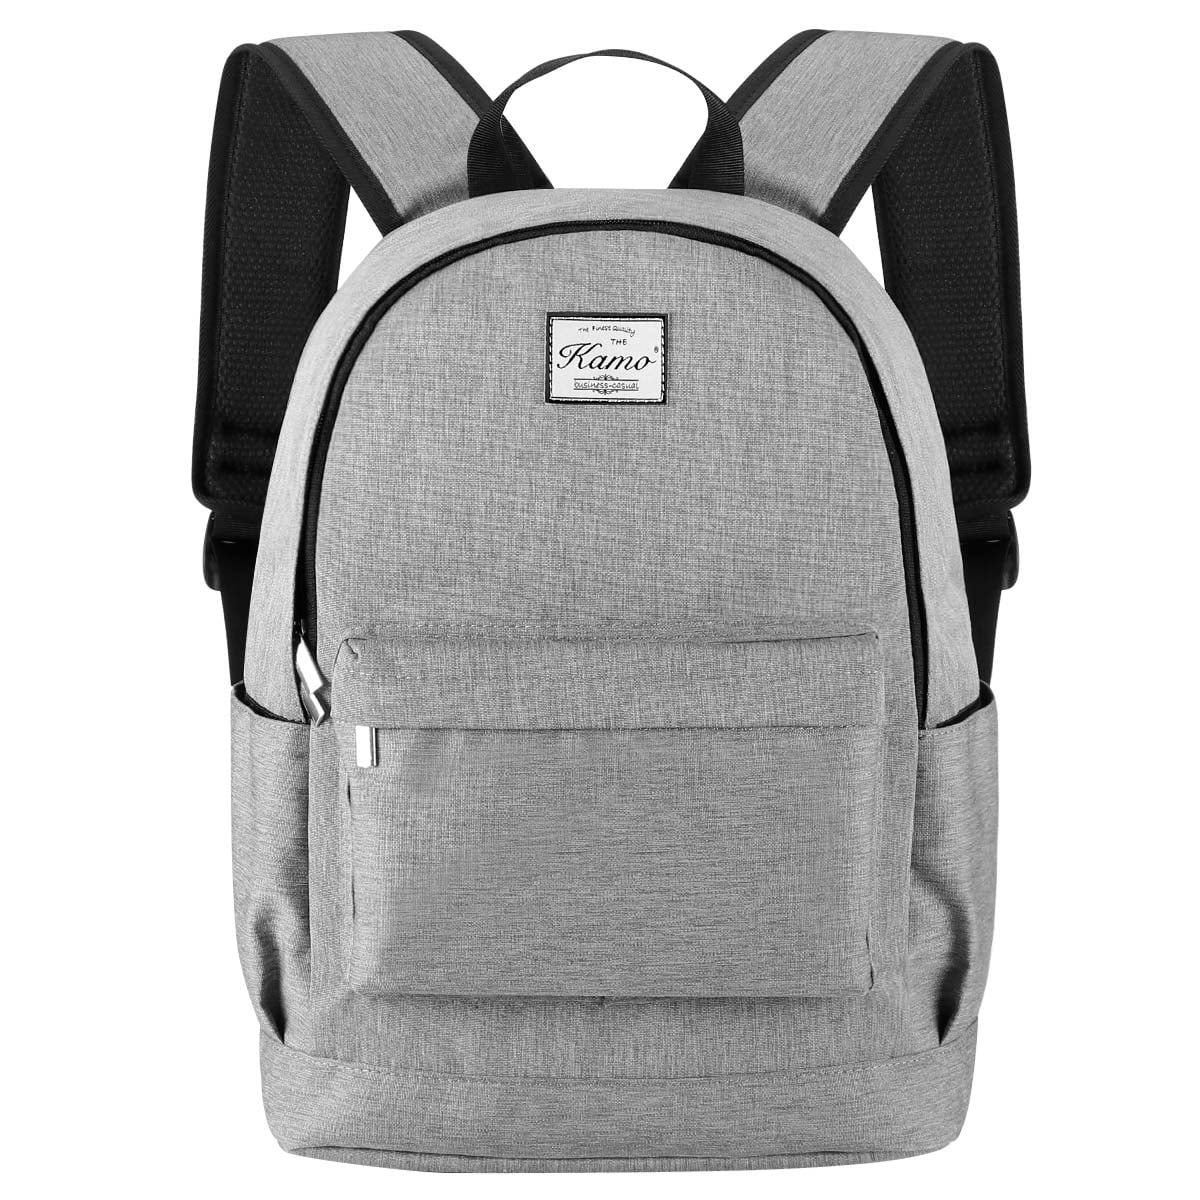 Butterfly Girl Floral Backpack for Women Men Girl Boy Daypack Fashion Laptop Backpack for School College Hiking Travel Bag Bookbag Schoolbag 